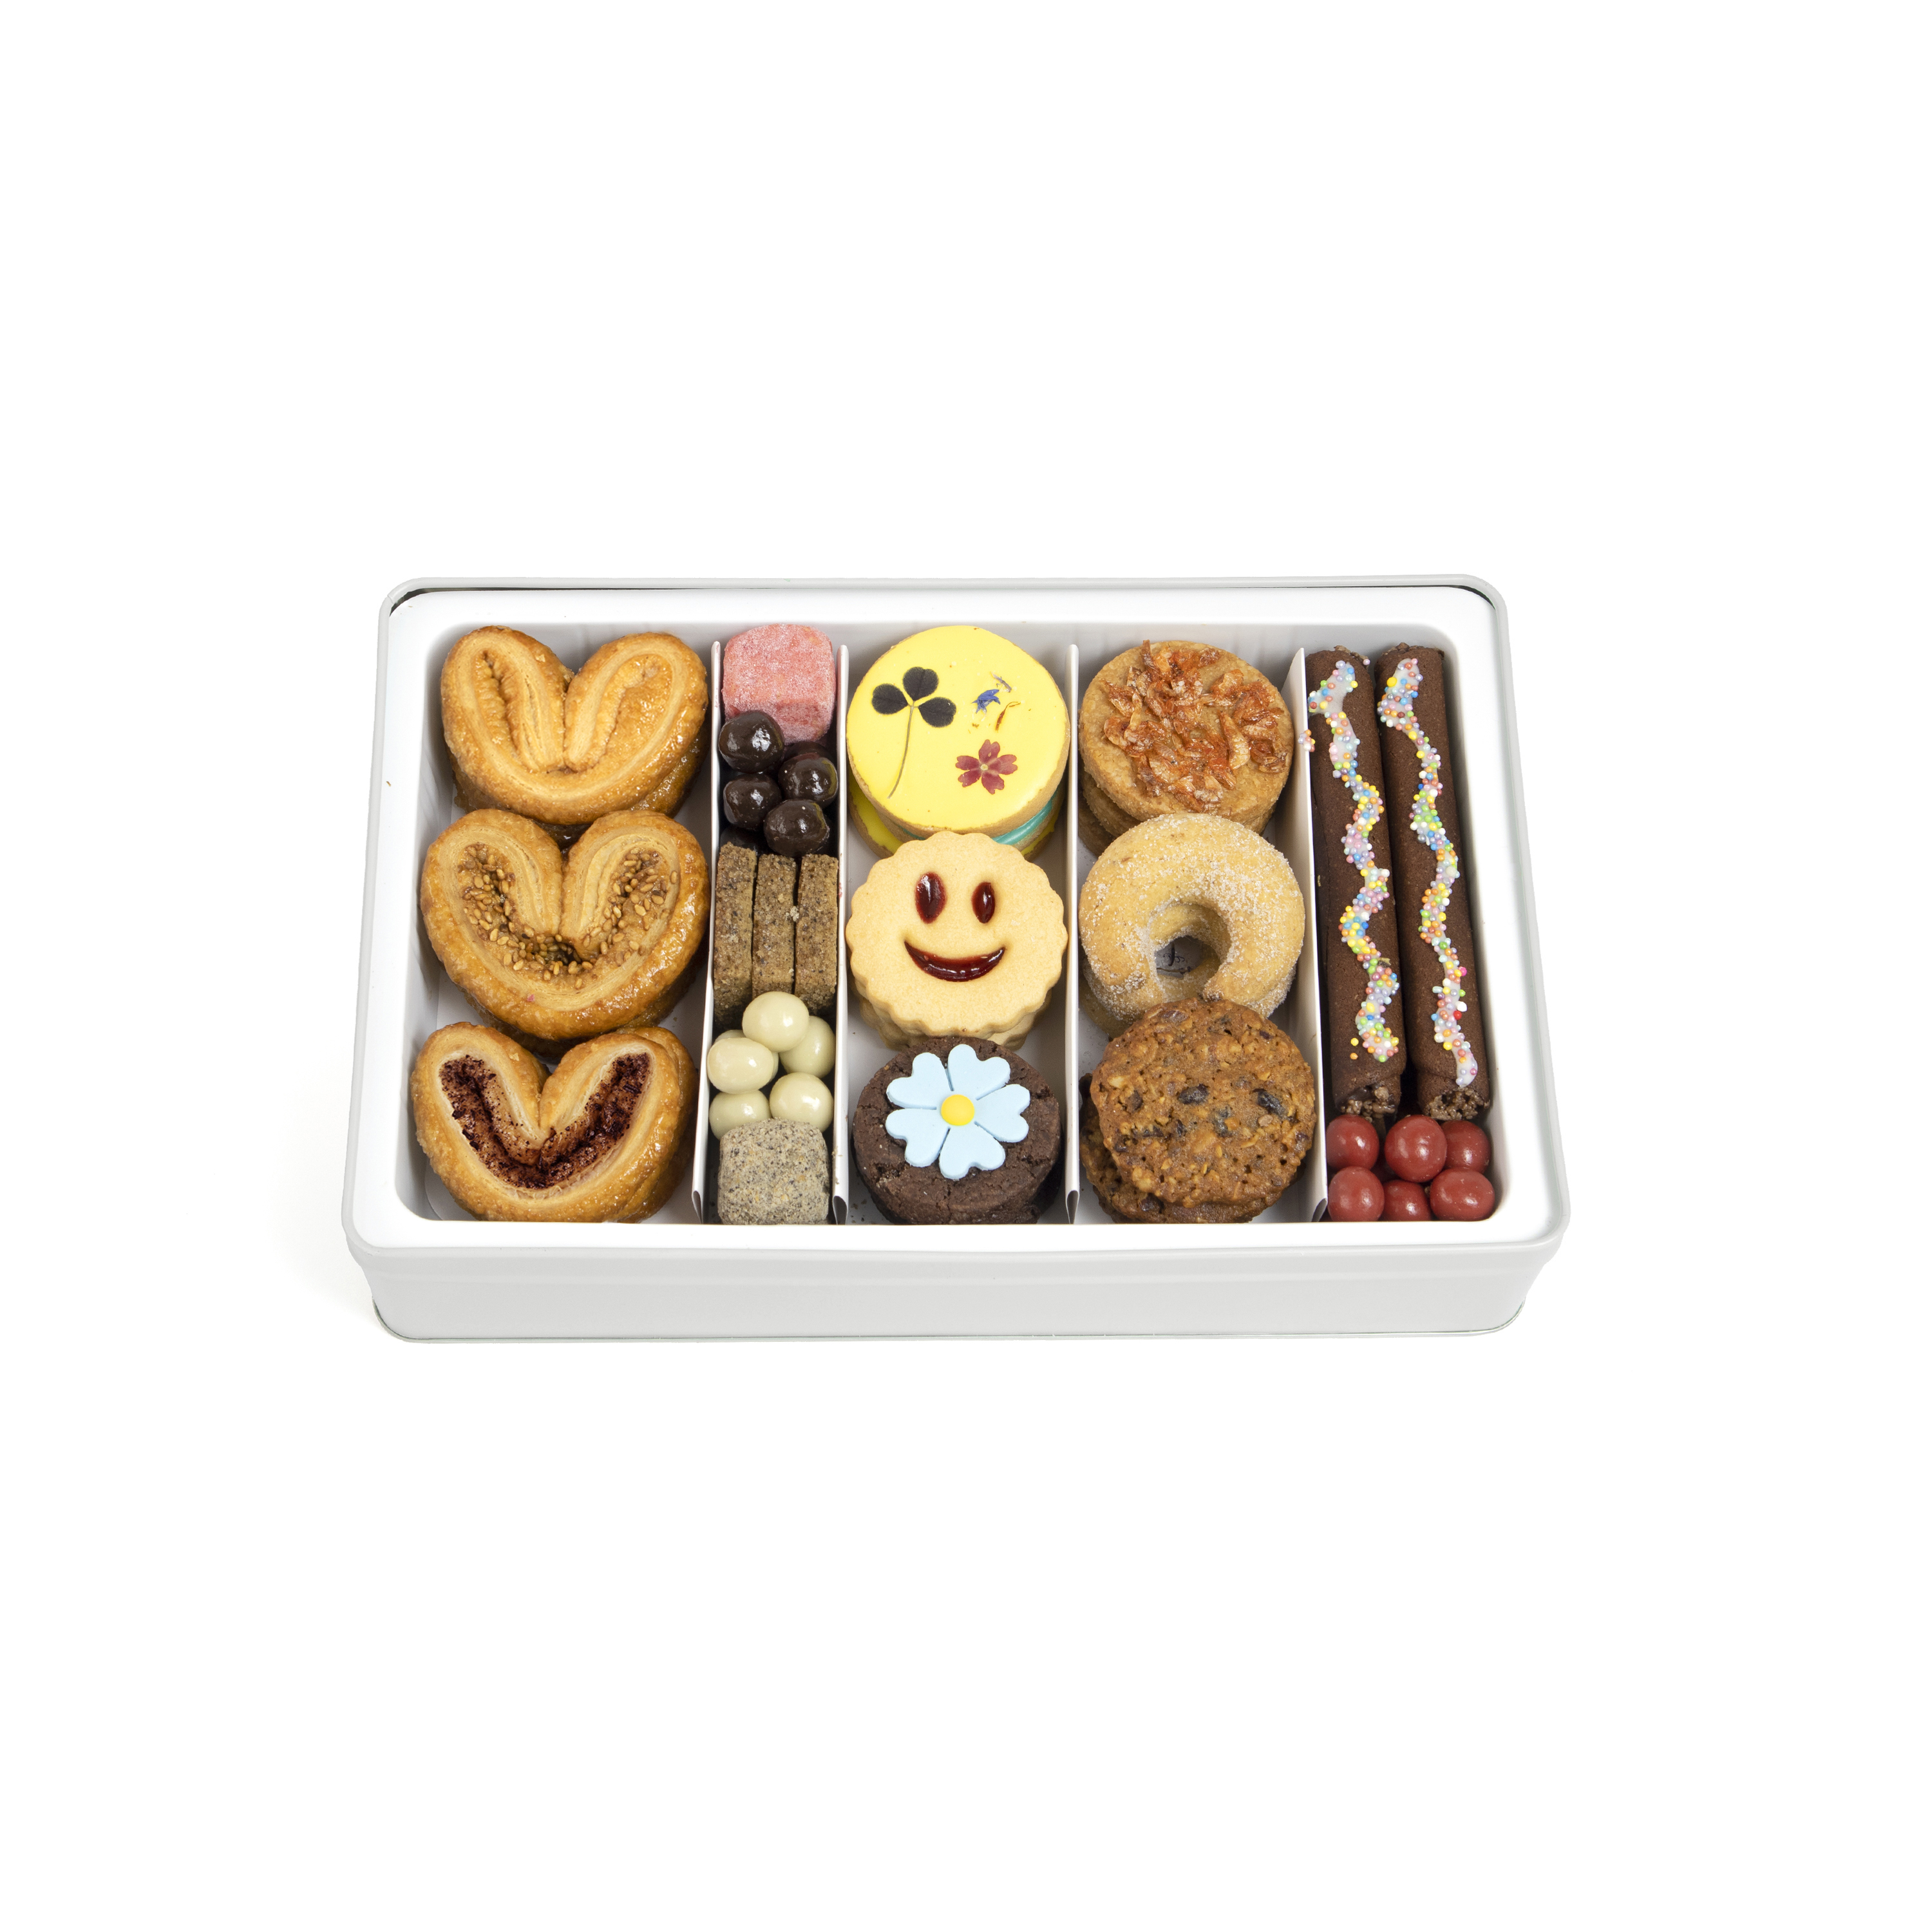 Supreme cookie gift box